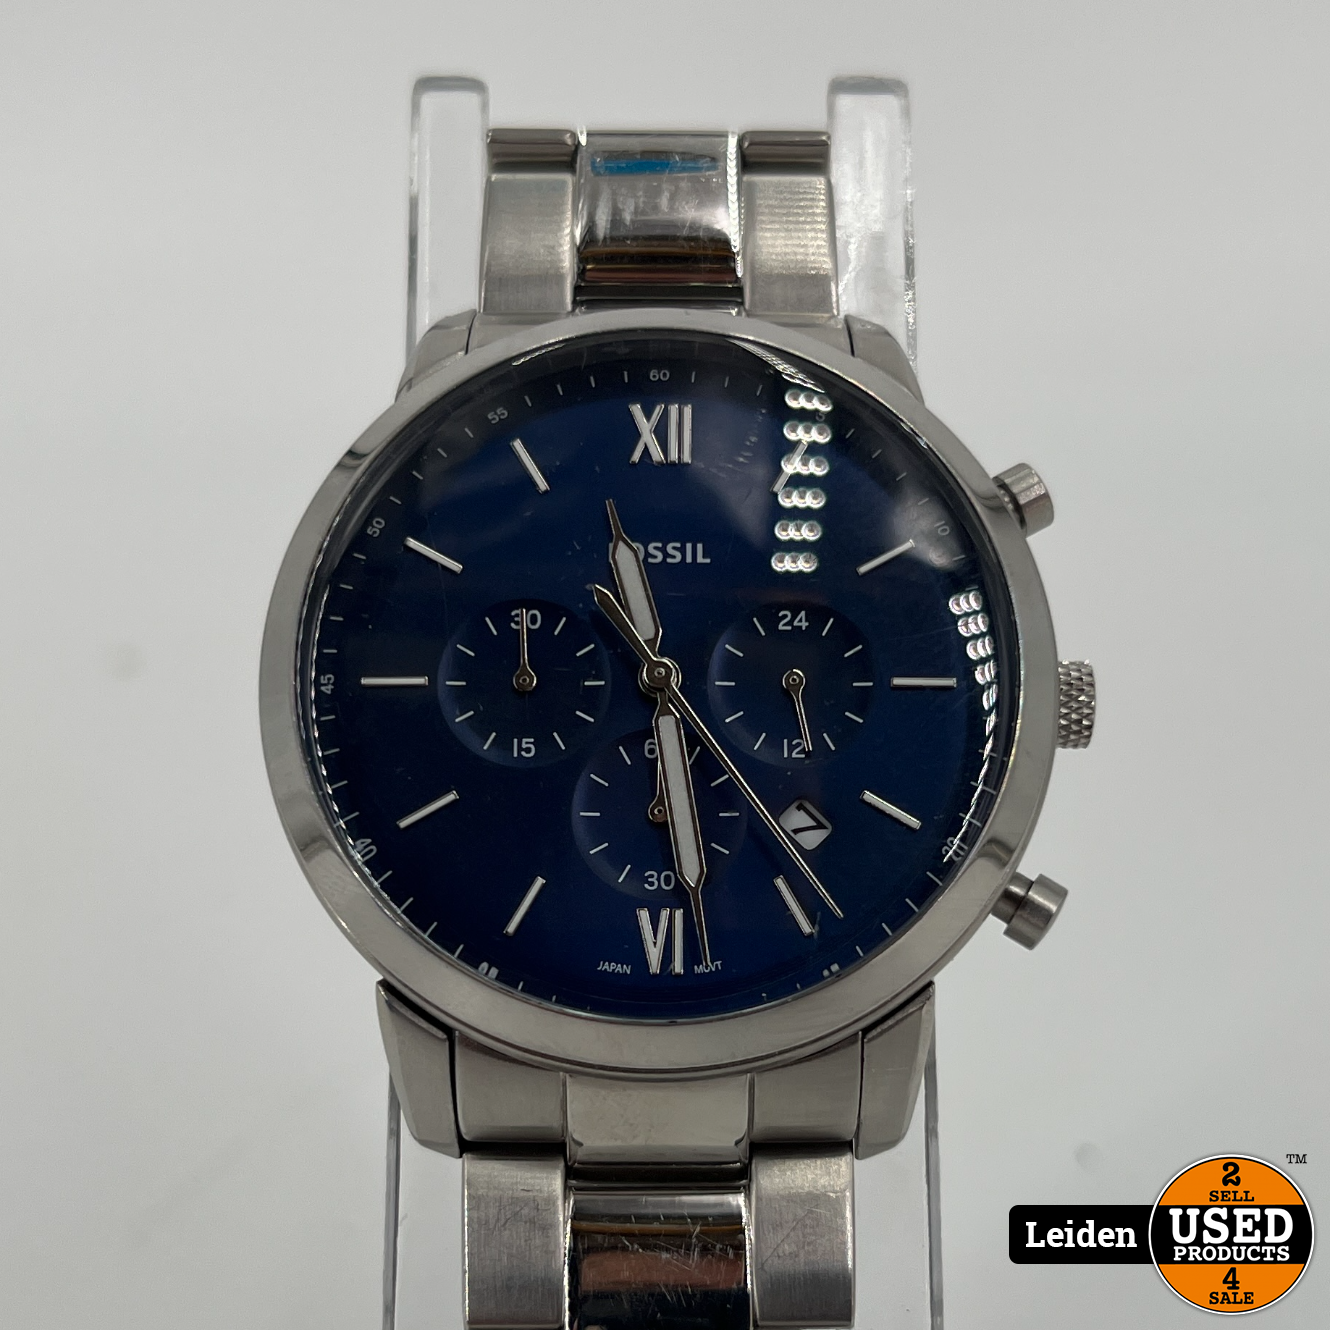 Leiden Horloge Fossil FS5792 - Neutra Chrono Used Products